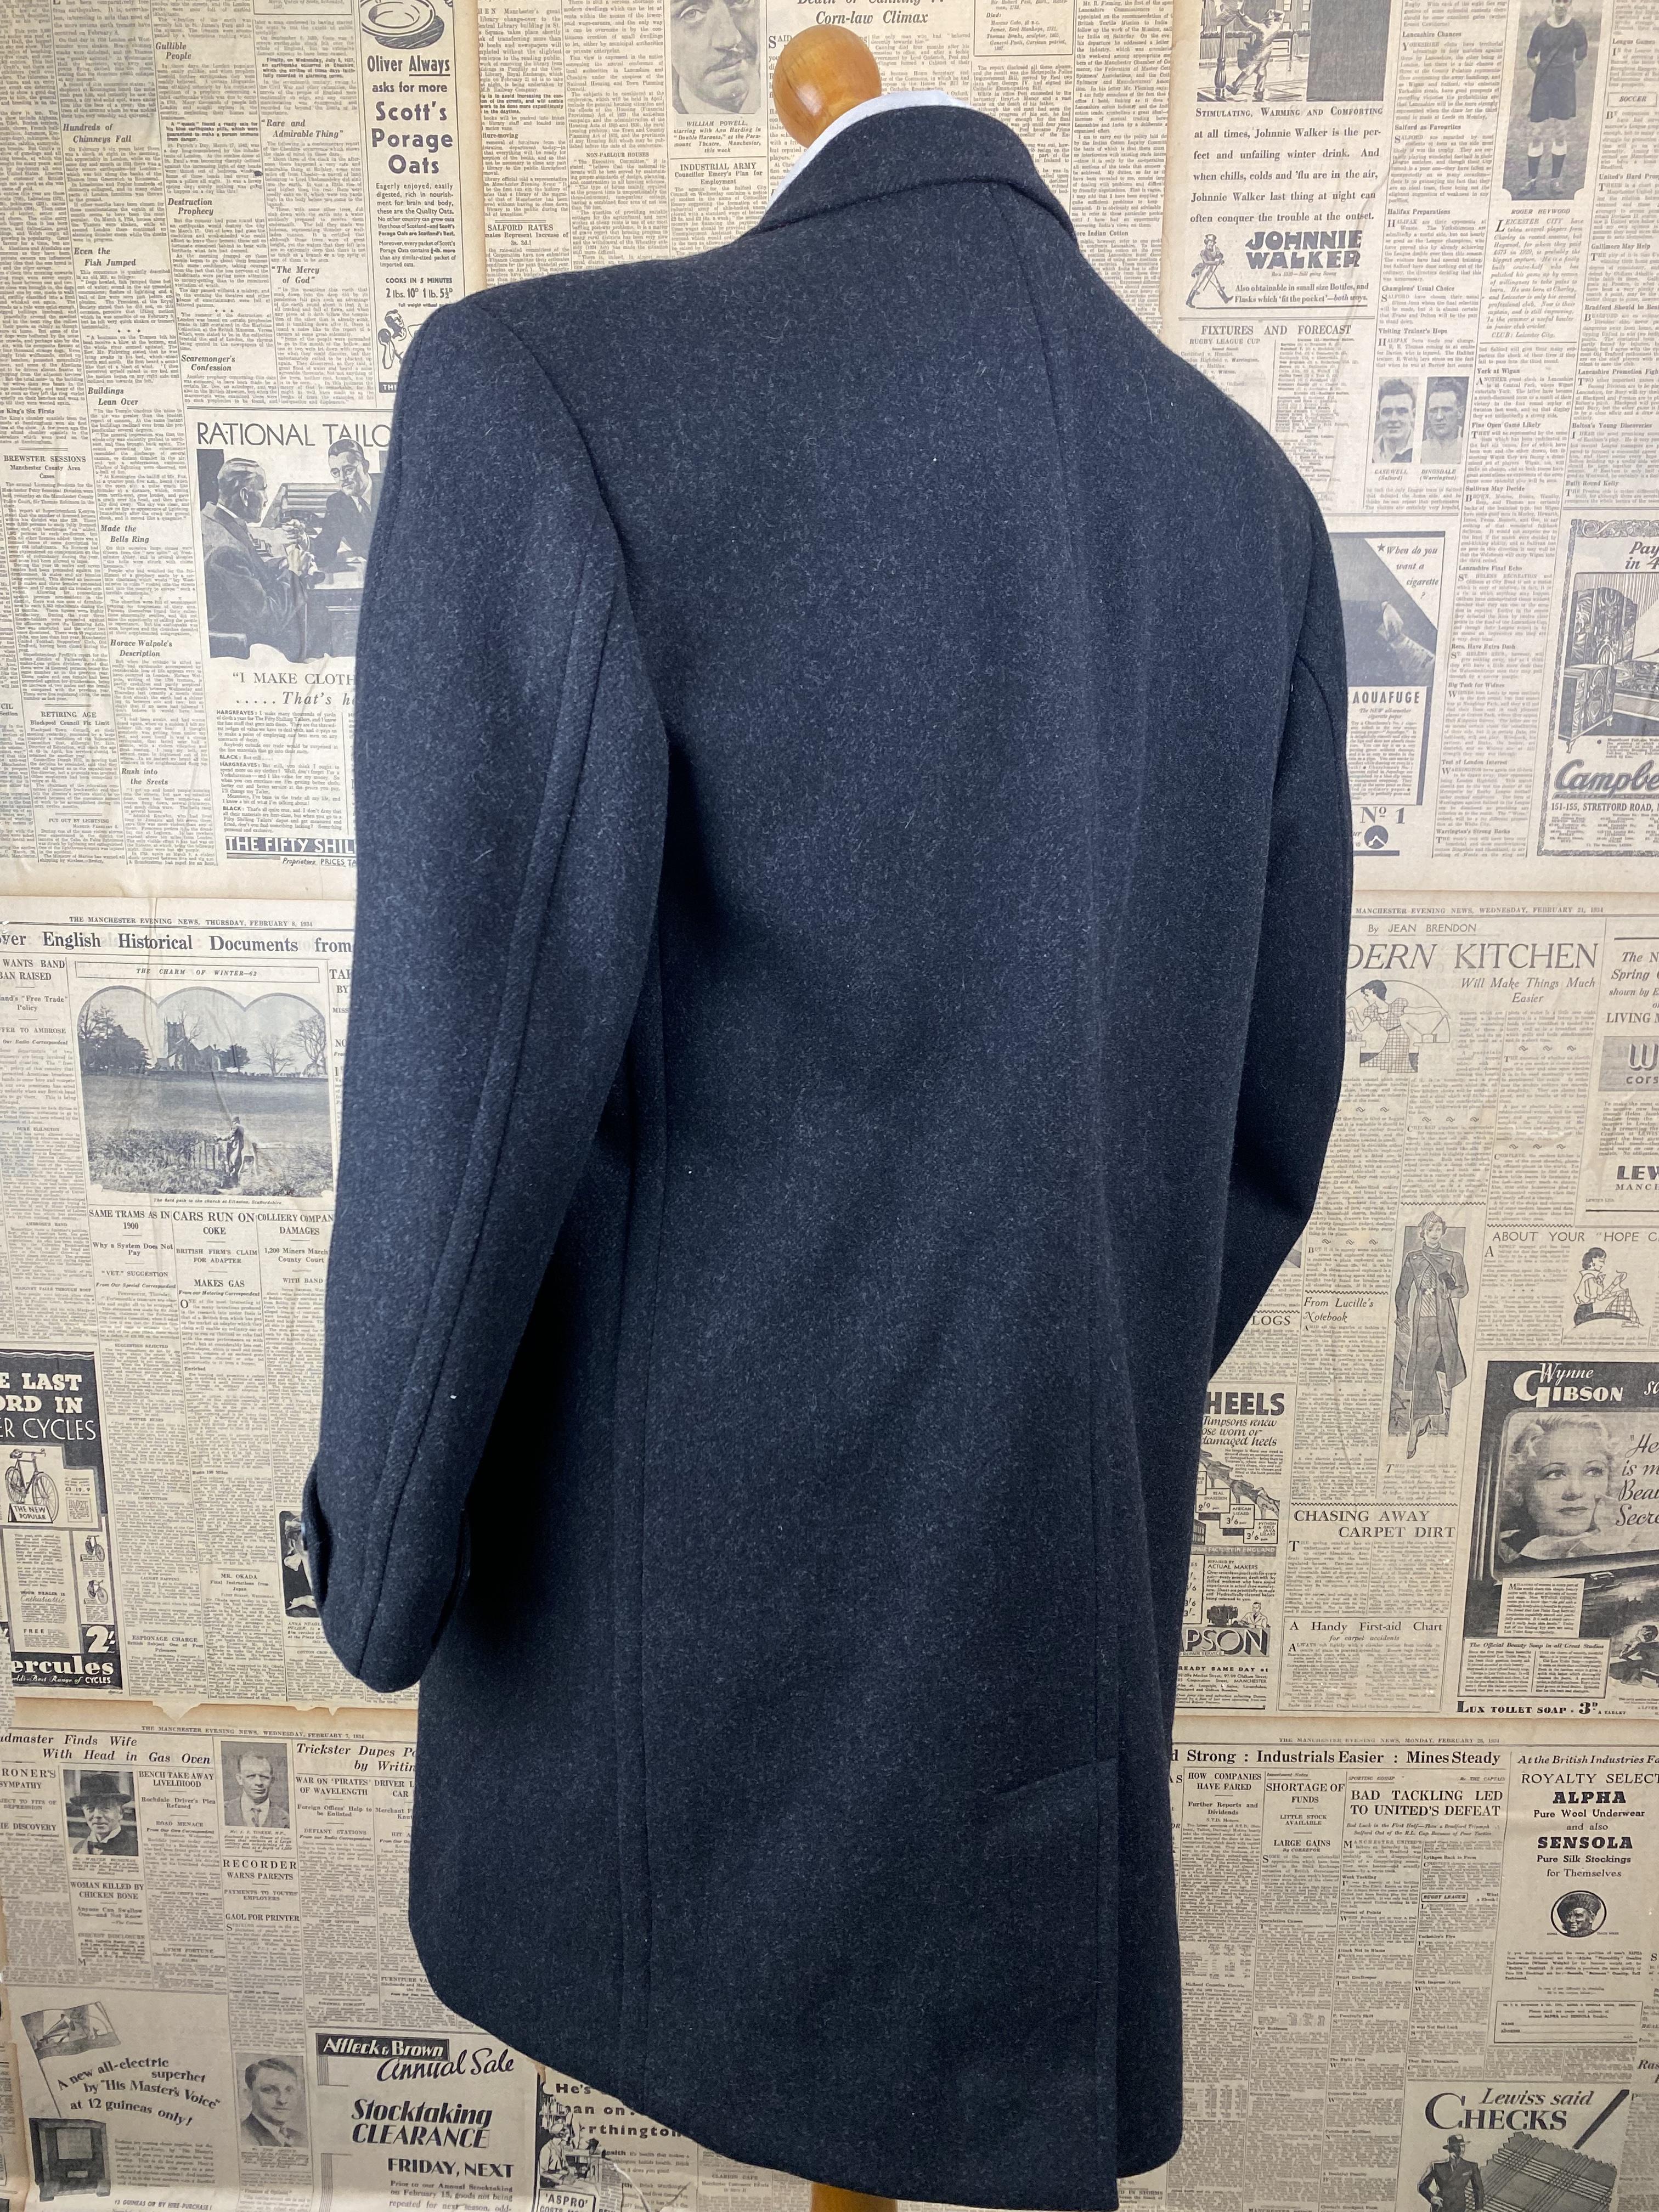 Vintage Hector Powe bespoke 1960's grey overcoat size 42